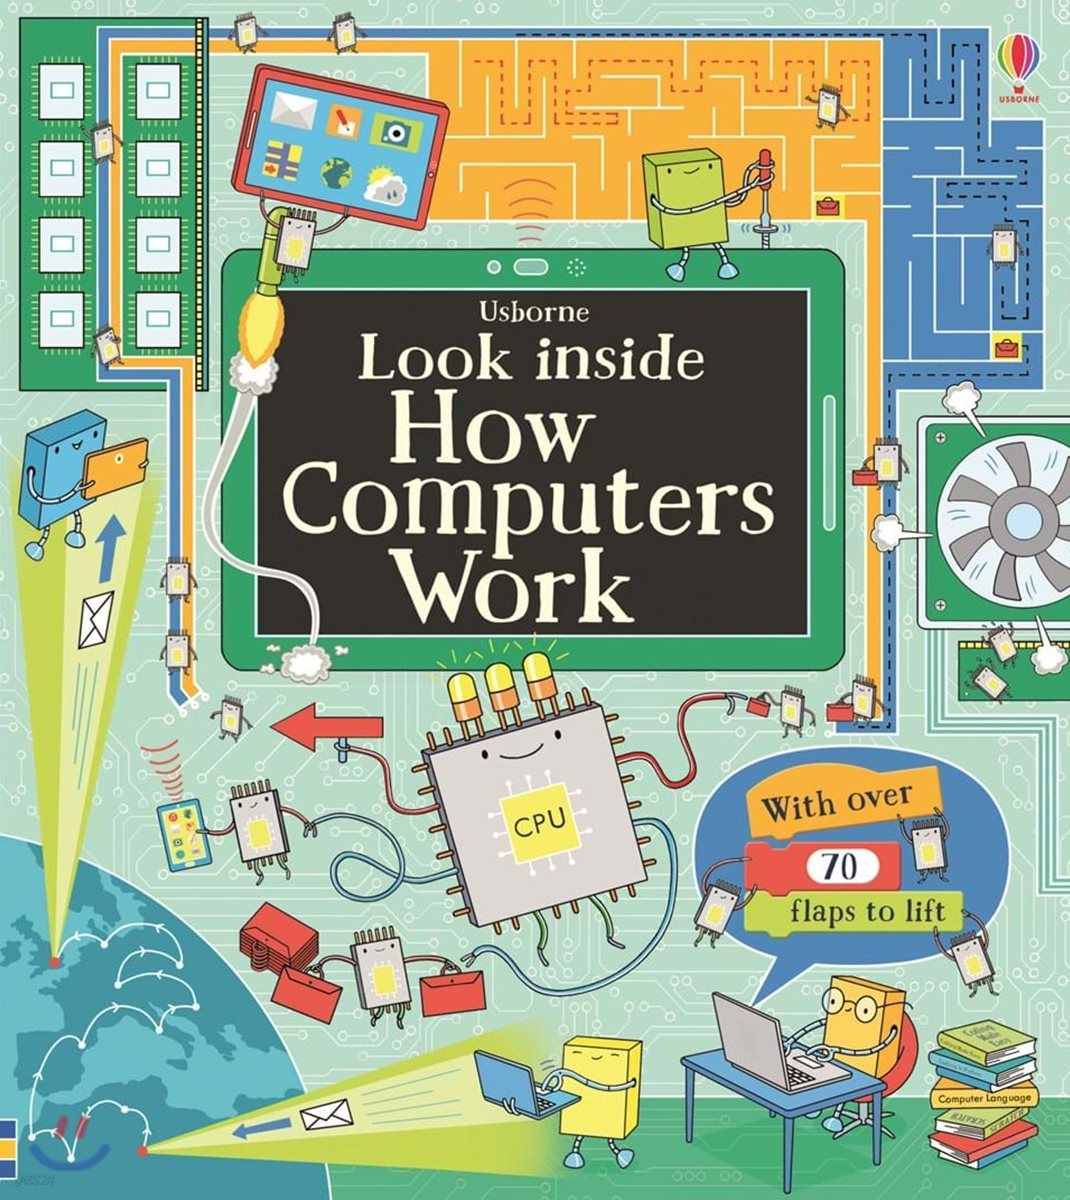 Look Inside How Computers Work